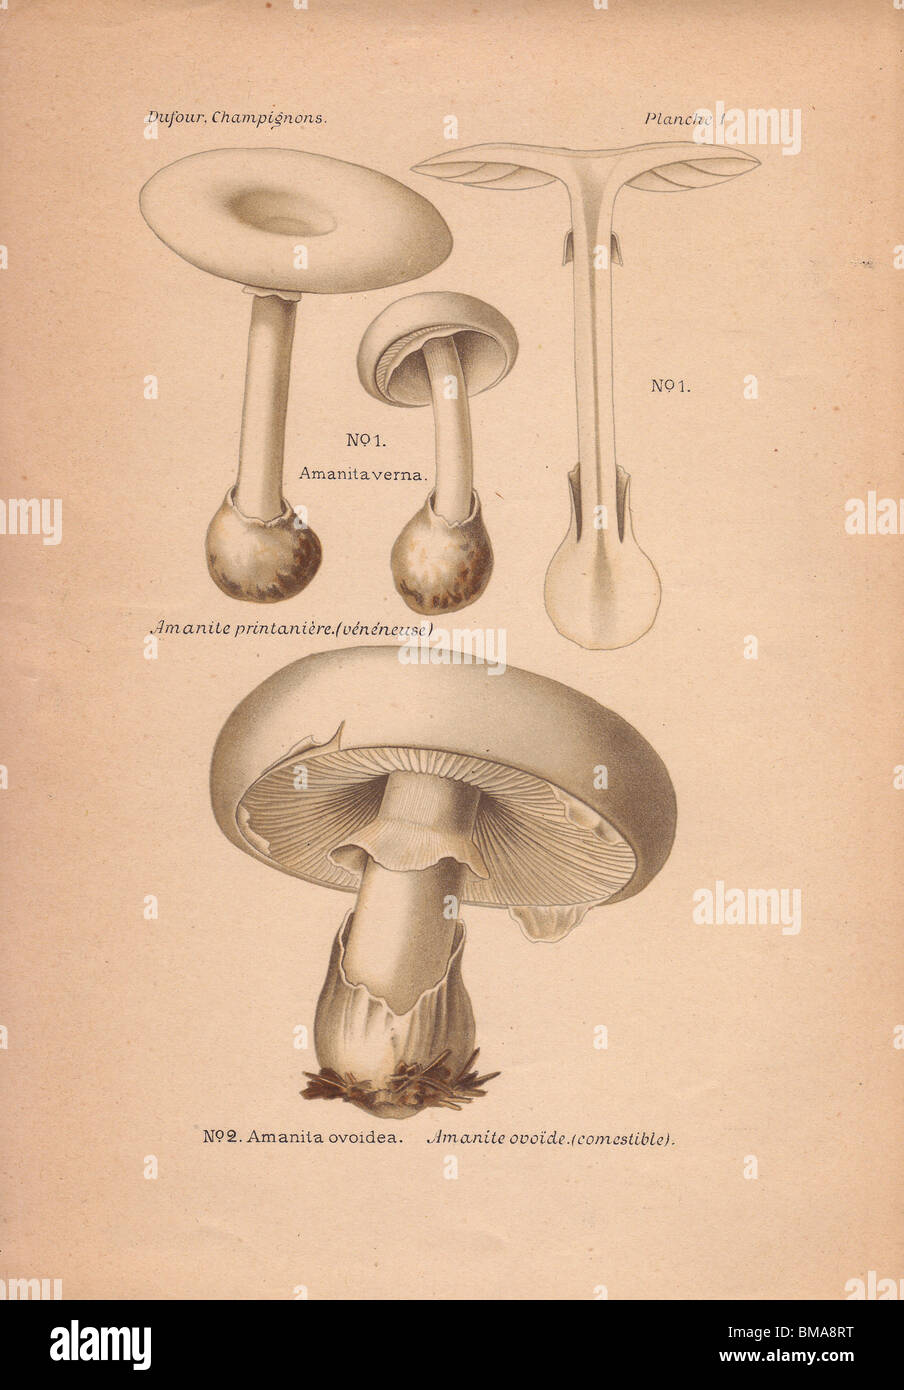 Poisonous fool's mushroom Amanita verna and edible European white egg mushroom Amanita ovoidea. Stock Photo